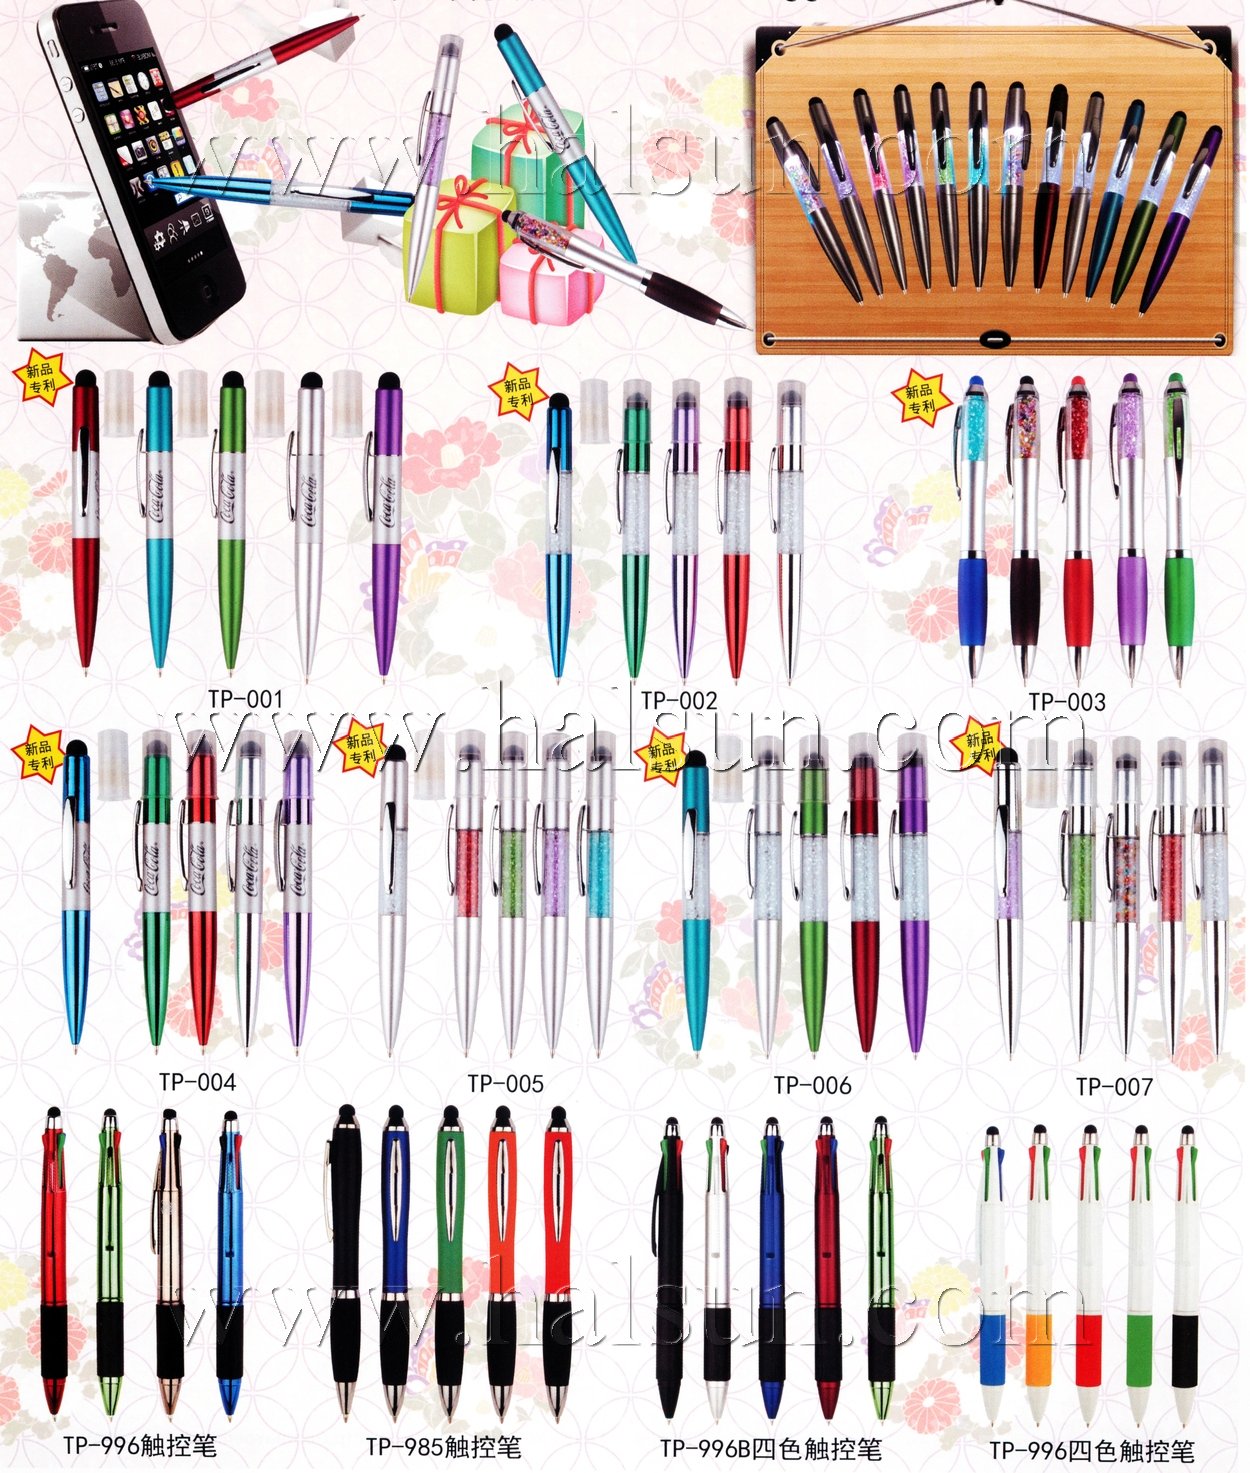 4 color stylus pens,jewel stylus pens,2015_08_07_17_39_03